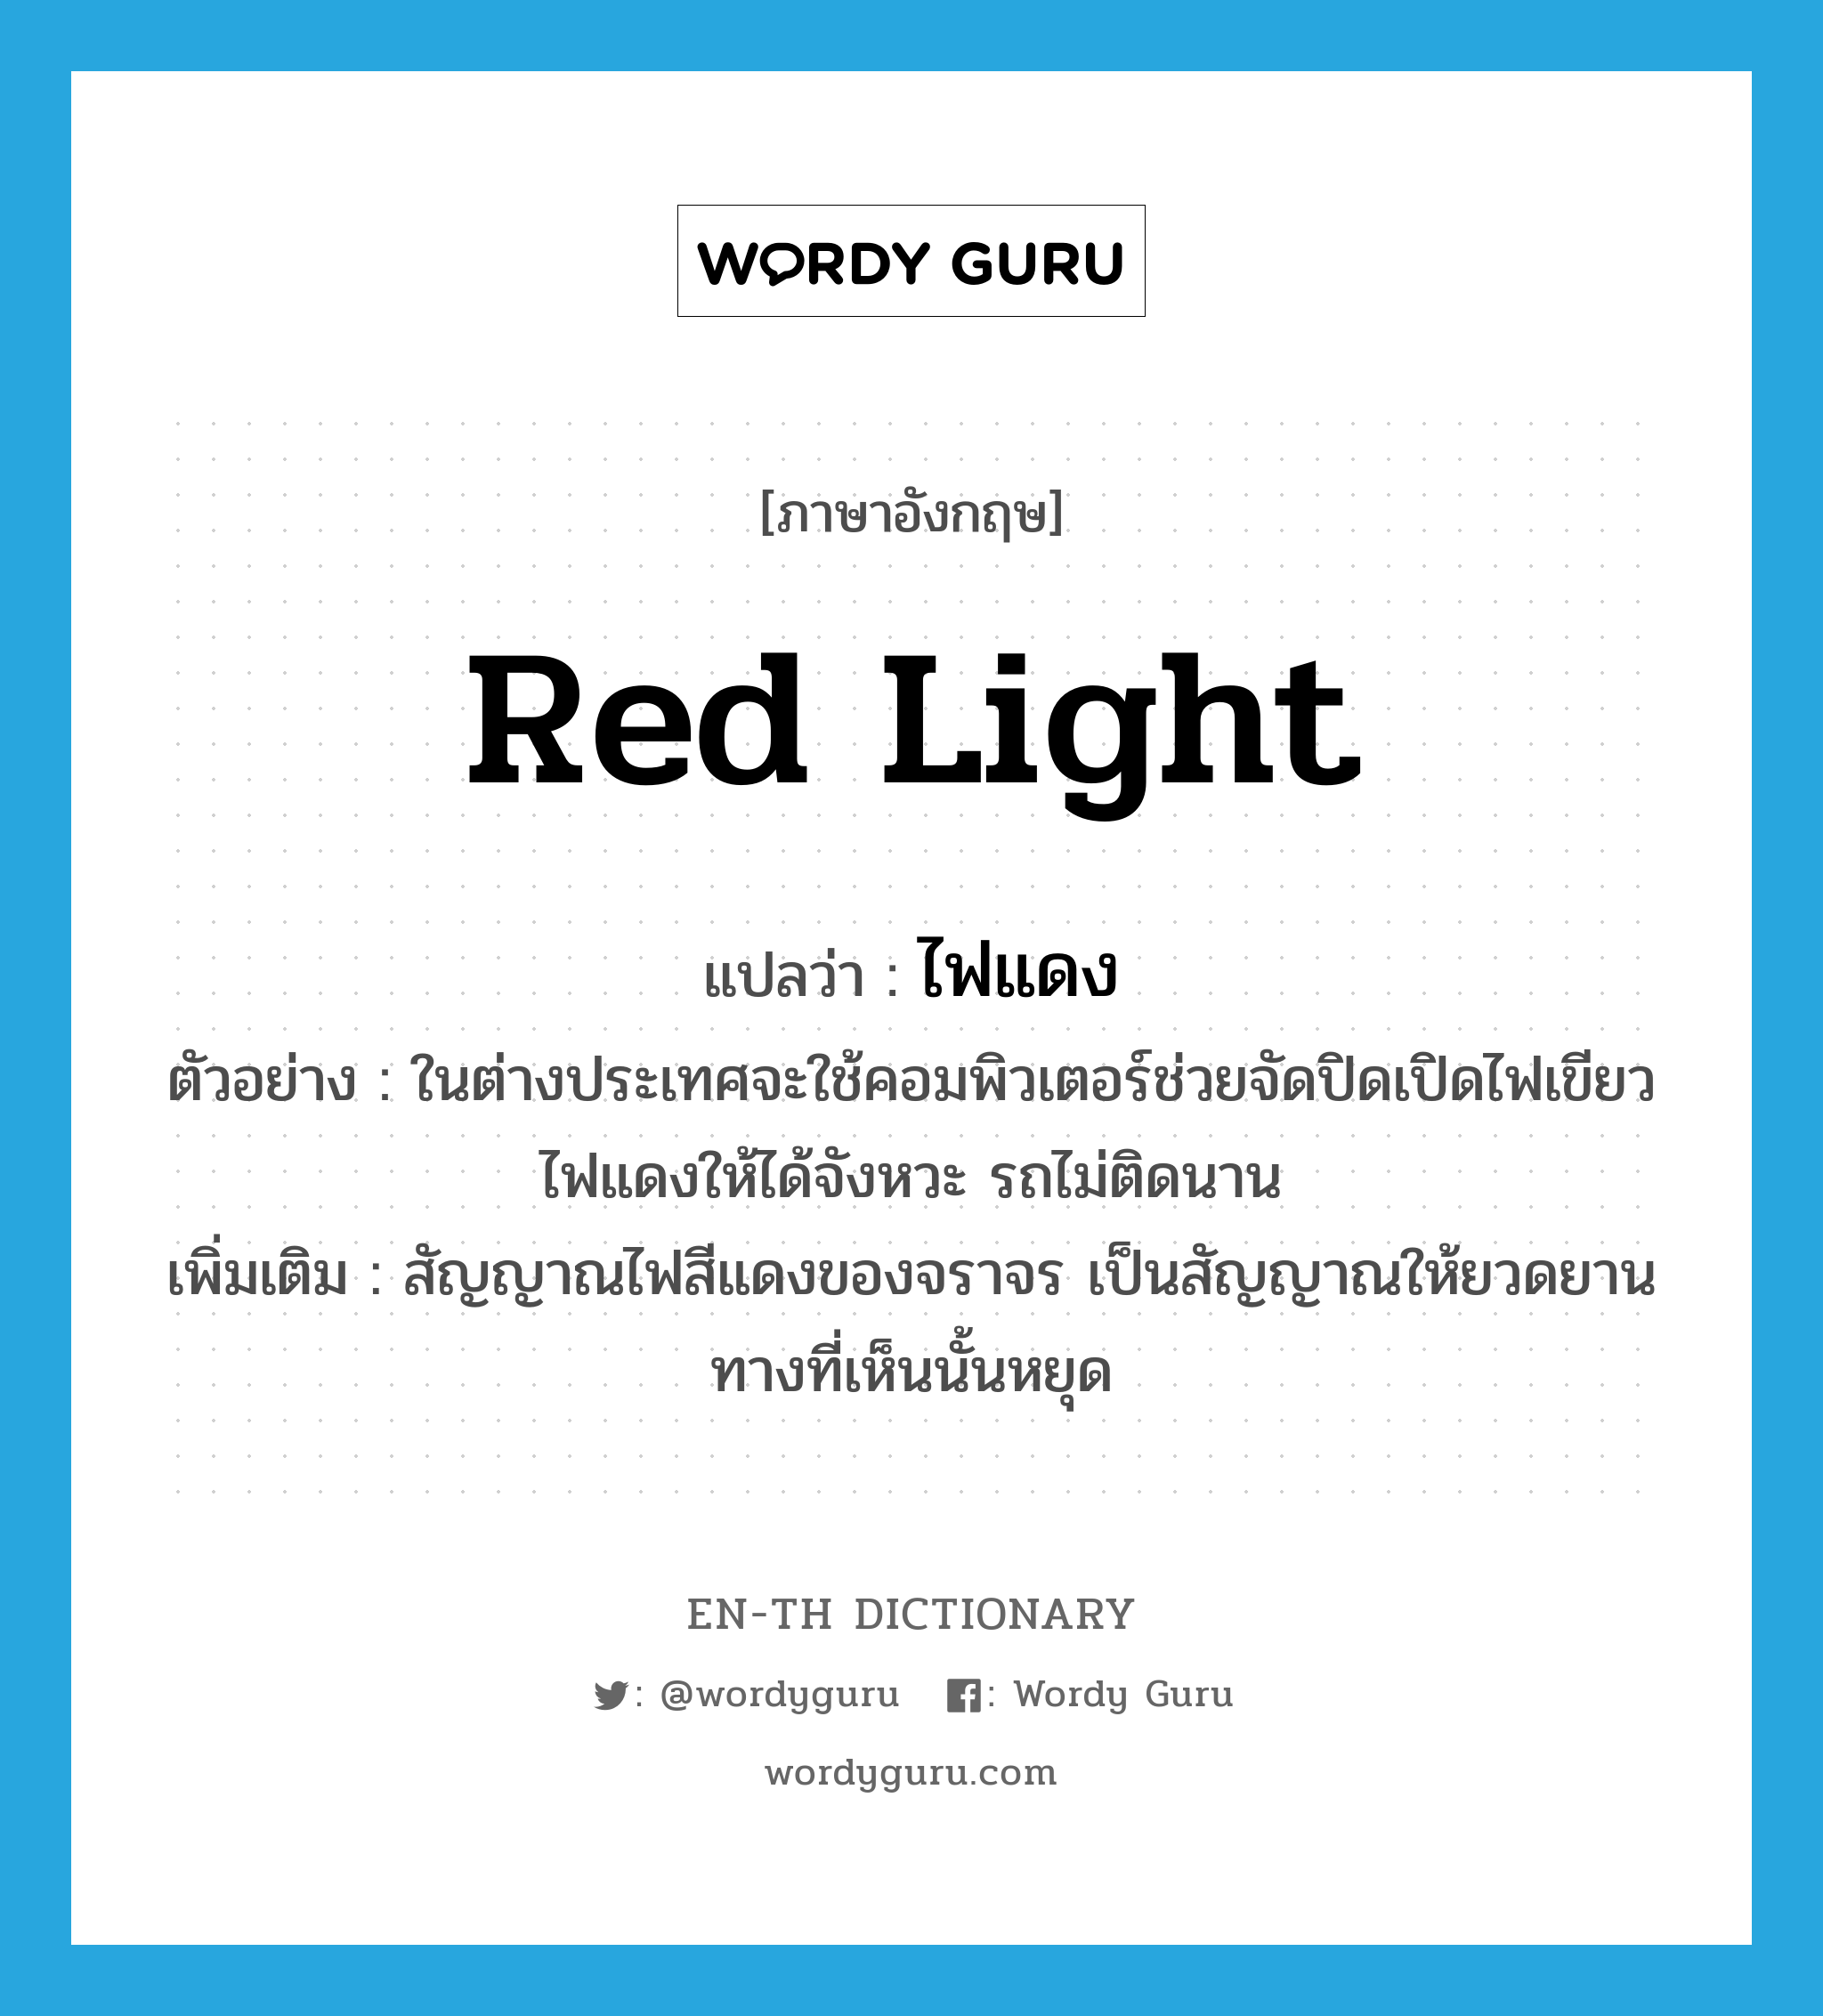 red light แปลว่า?, คำศัพท์ภาษาอังกฤษ red light แปลว่า ไฟแดง ประเภท N ตัวอย่าง ในต่างประเทศจะใช้คอมพิวเตอร์ช่วยจัดปิดเปิดไฟเขียวไฟแดงให้ได้จังหวะ รถไม่ติดนาน เพิ่มเติม สัญญาณไฟสีแดงของจราจร เป็นสัญญาณให้ยวดยานทางที่เห็นนั้นหยุด หมวด N